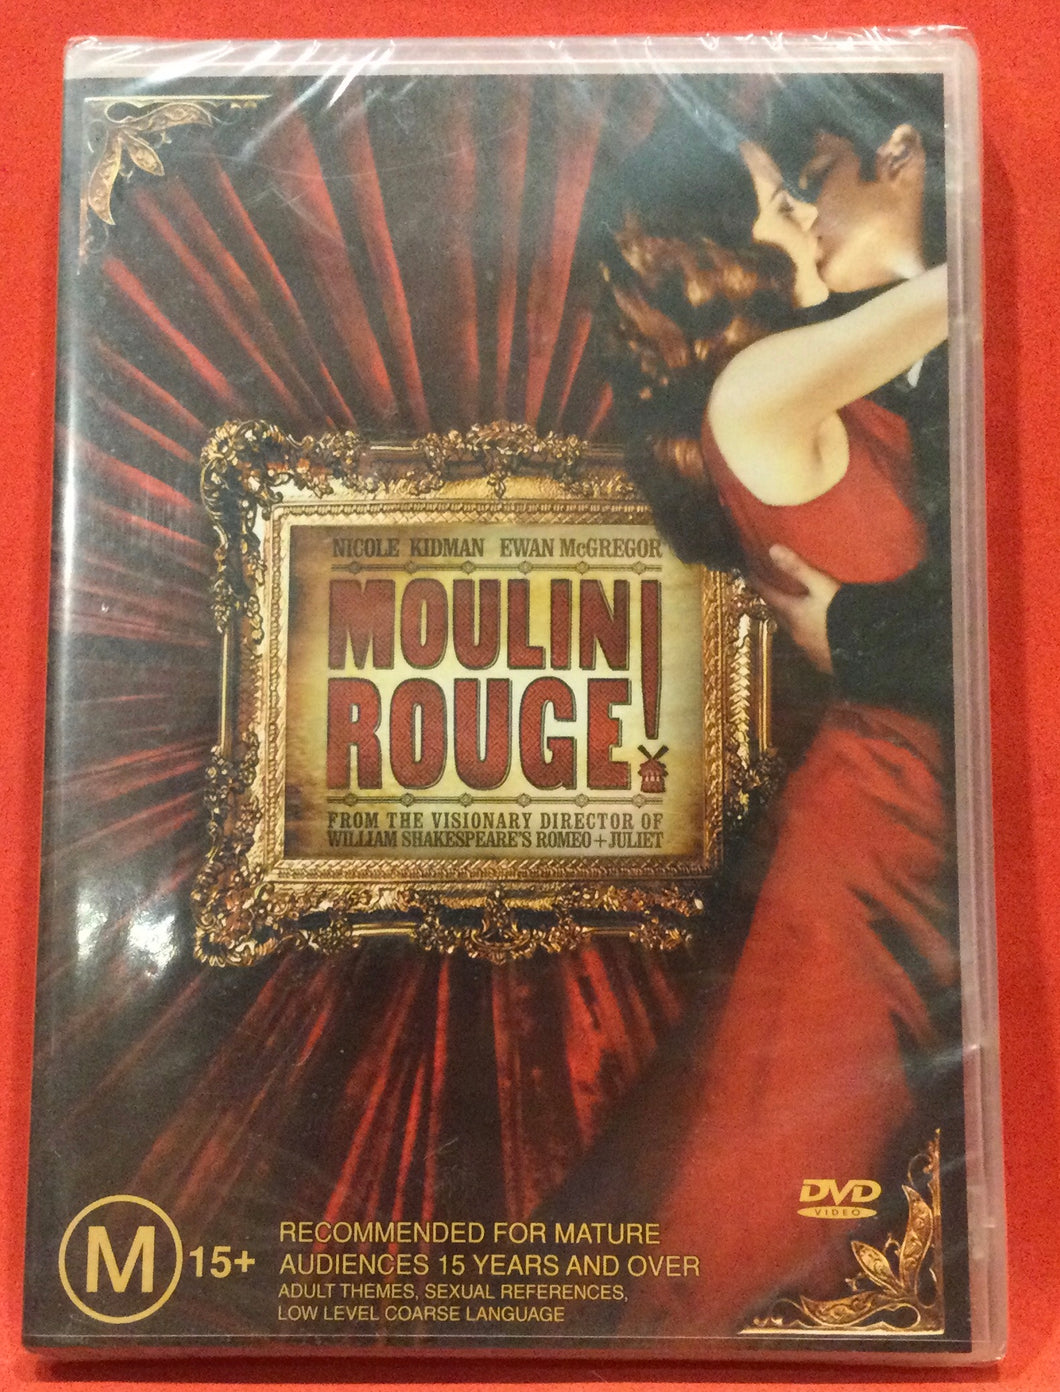 MOULIN ROUGE! - DVD (SEALED)